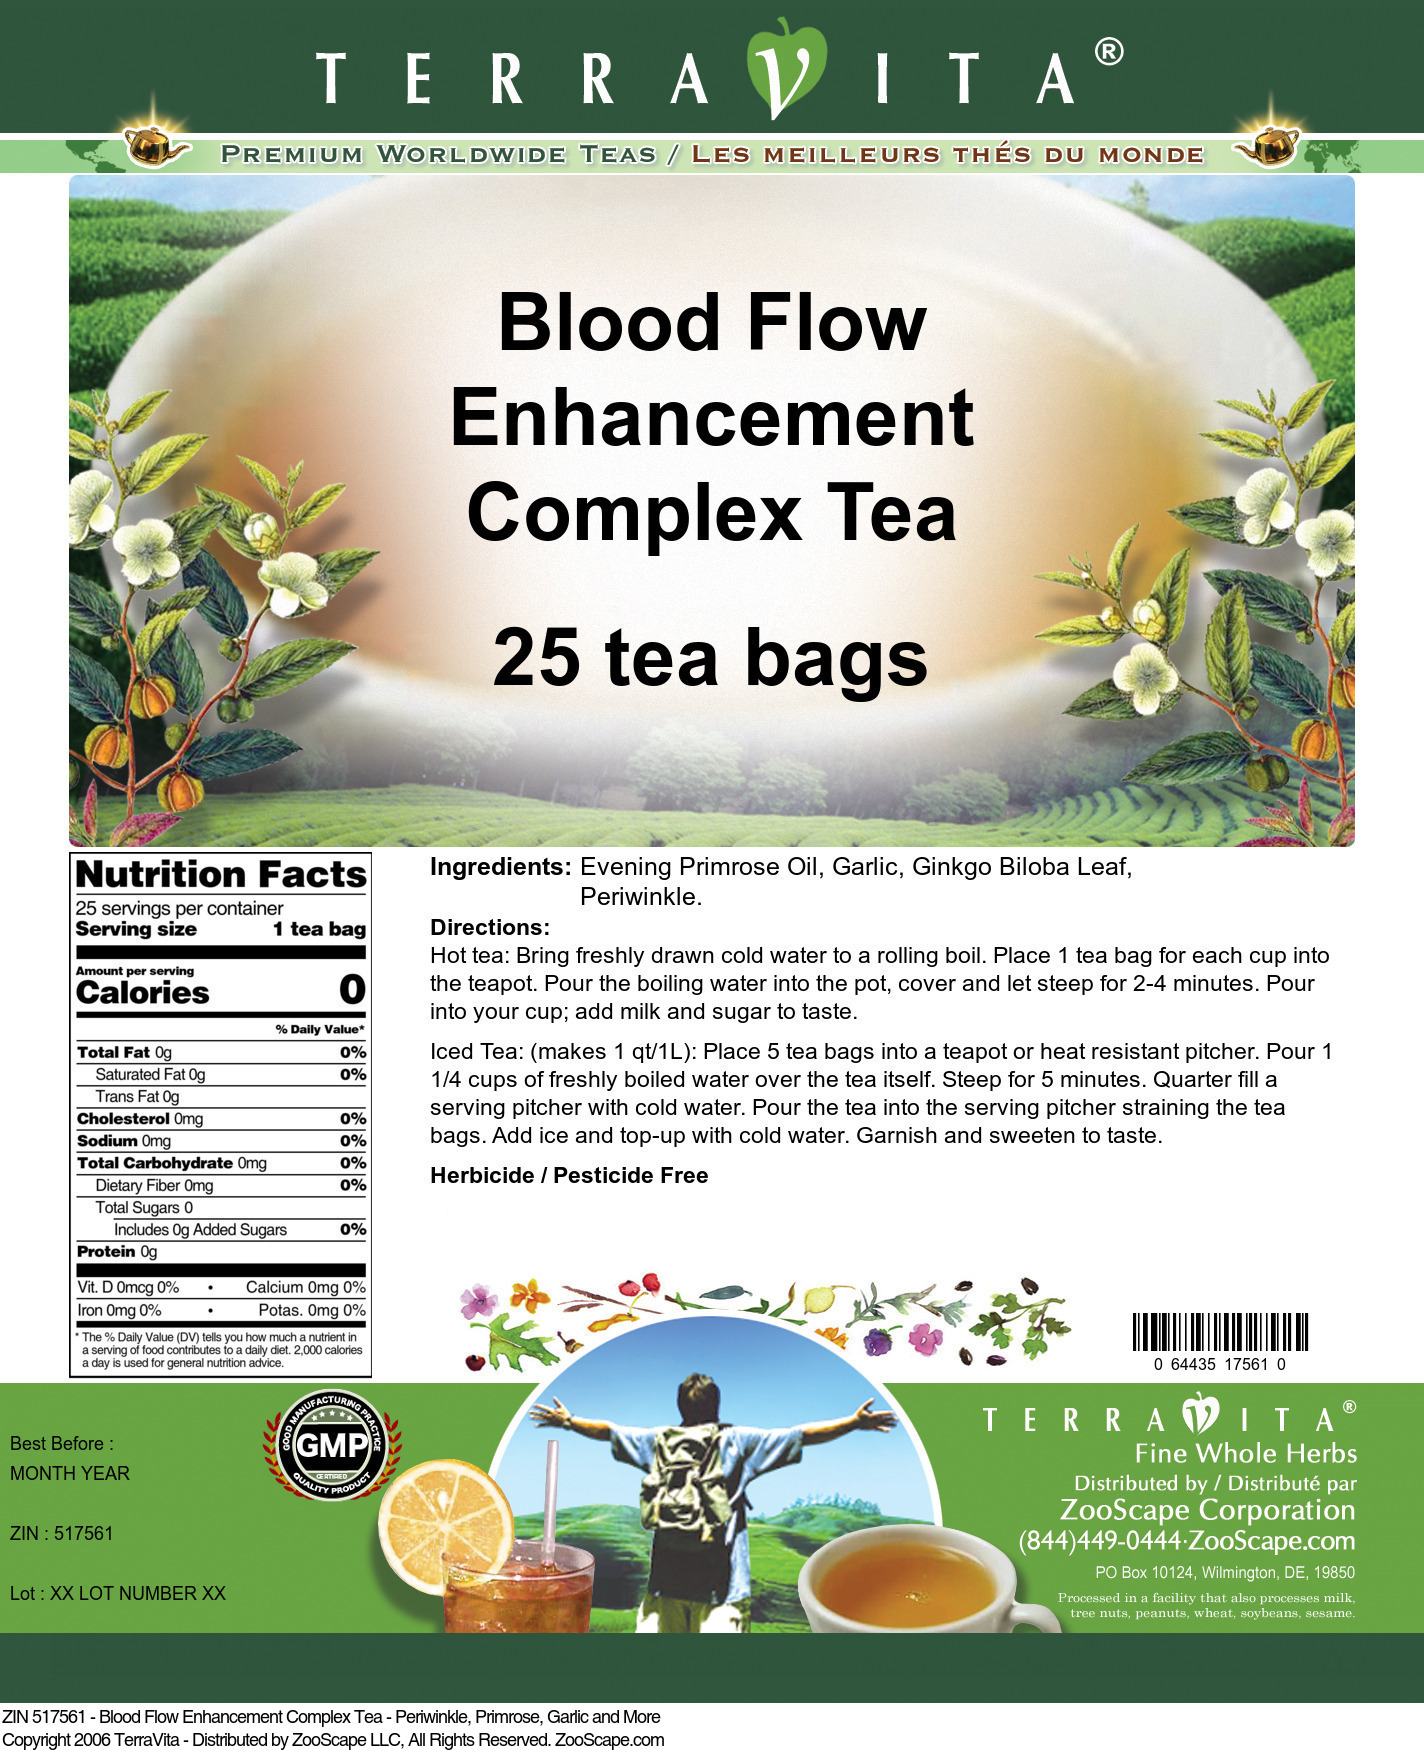 Blood Flow Enhancement Complex Tea - Periwinkle, Primrose, Garlic and More - Label